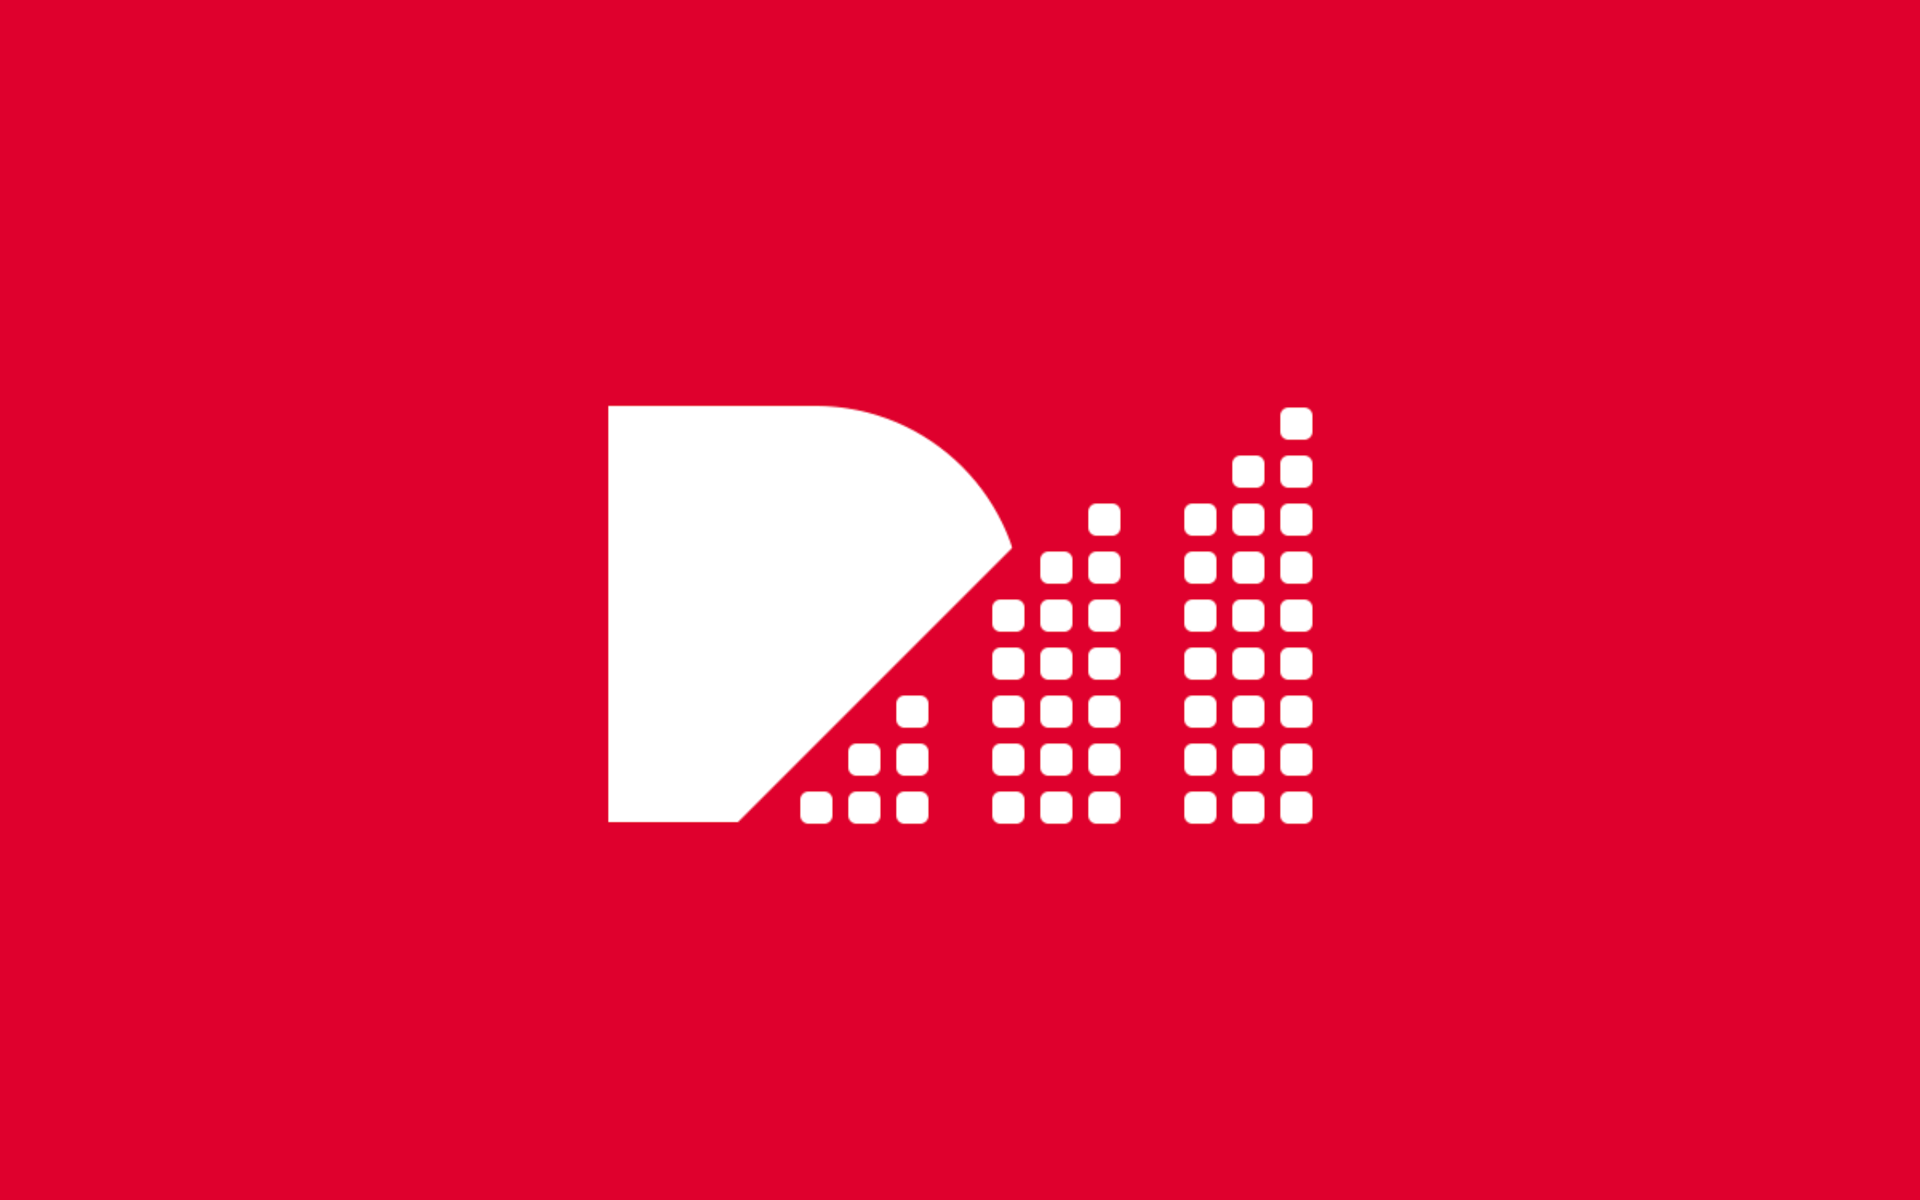 Cardinal Digital Marketing logo